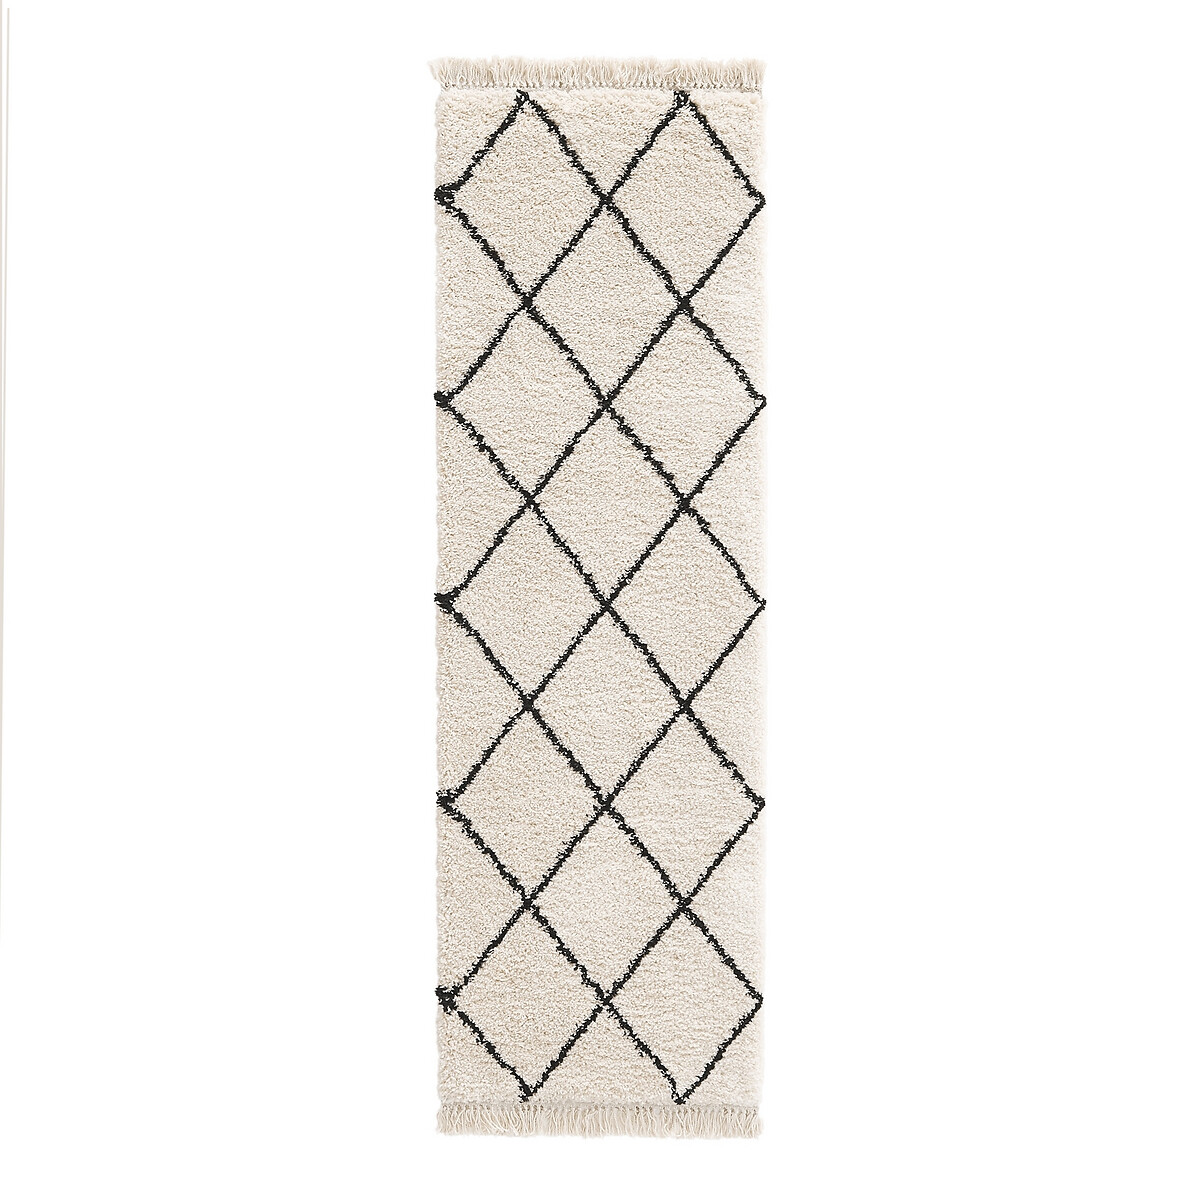 Ковер La Redoute Для коридора в берберском стиле Jiraya 80 x 300 см белый, размер 80 x 300 см - фото 2